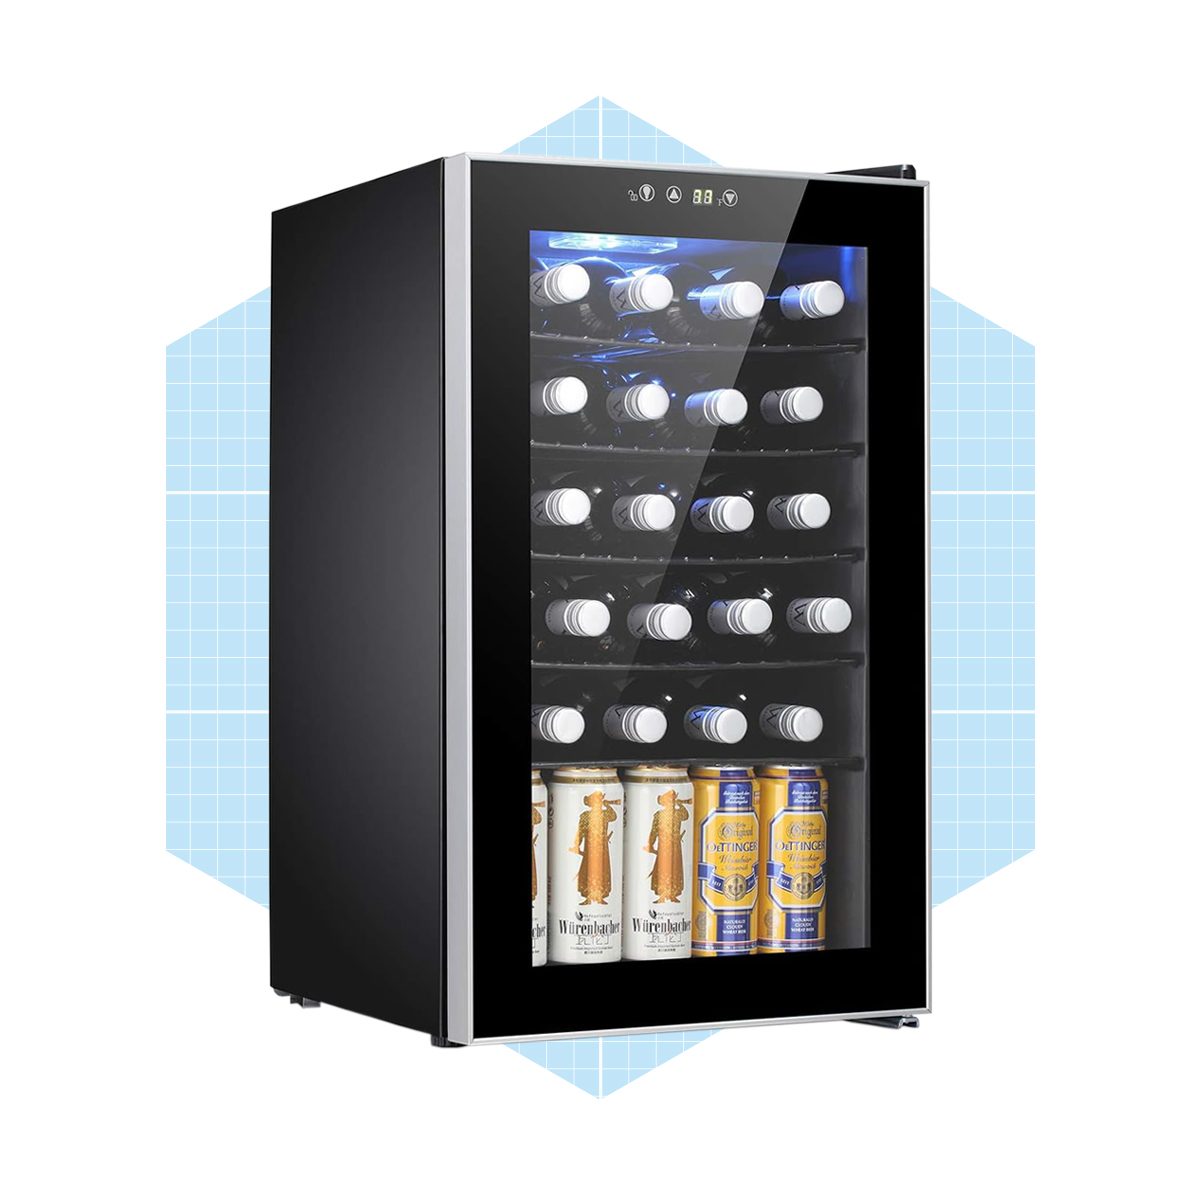 120 Can Beverage Refrigerator – hOmeLabs